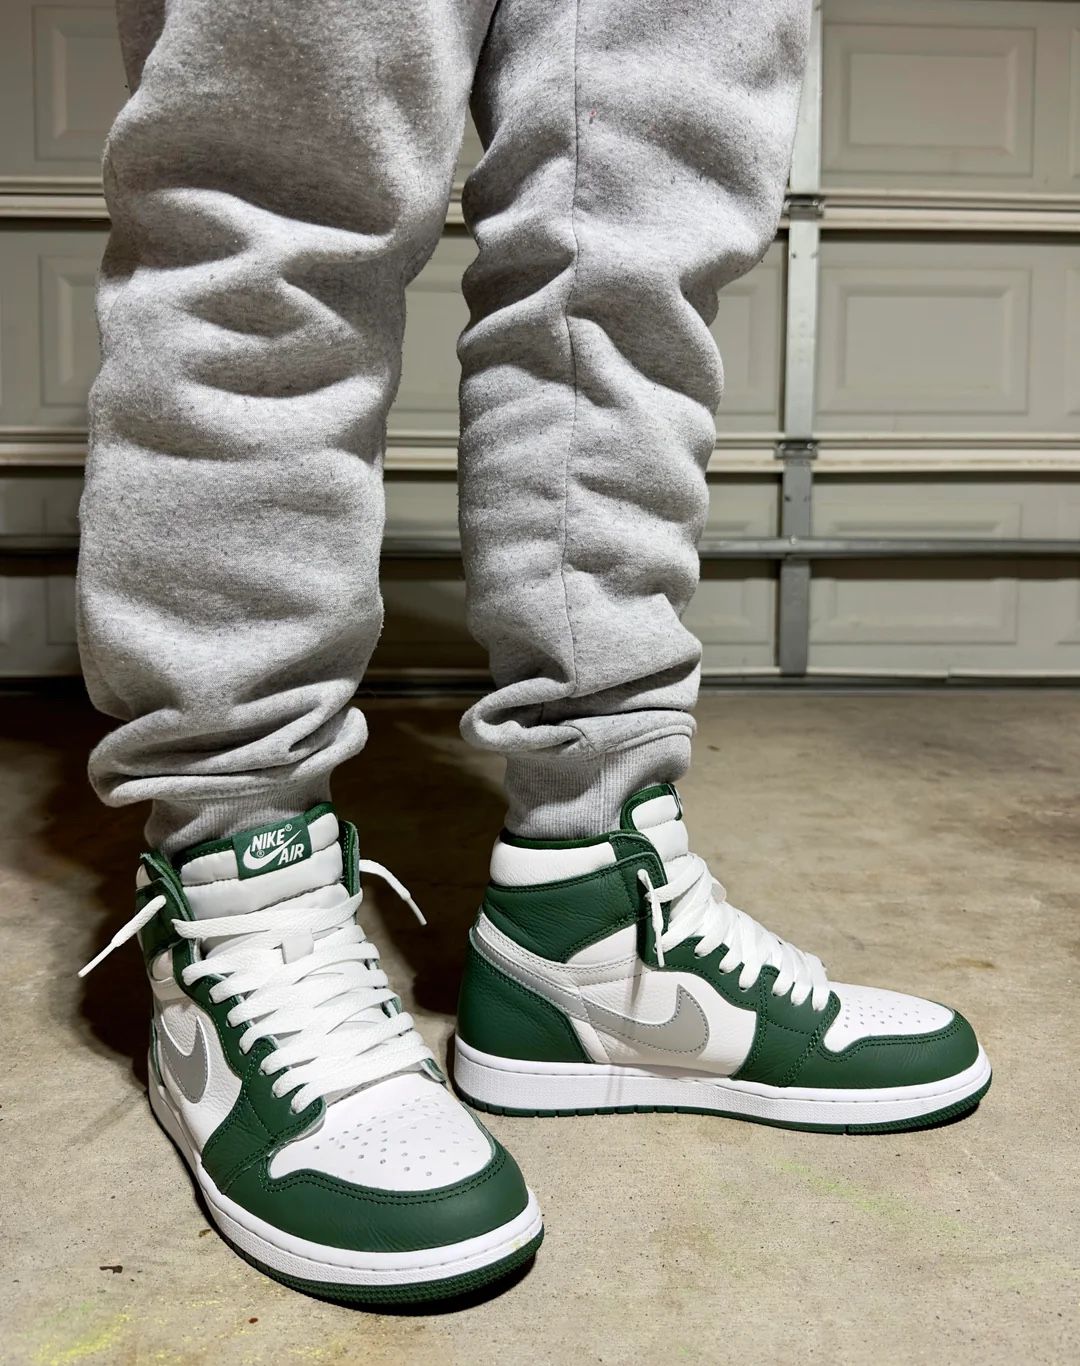 Jordan 1 highs, Green color way, size 12